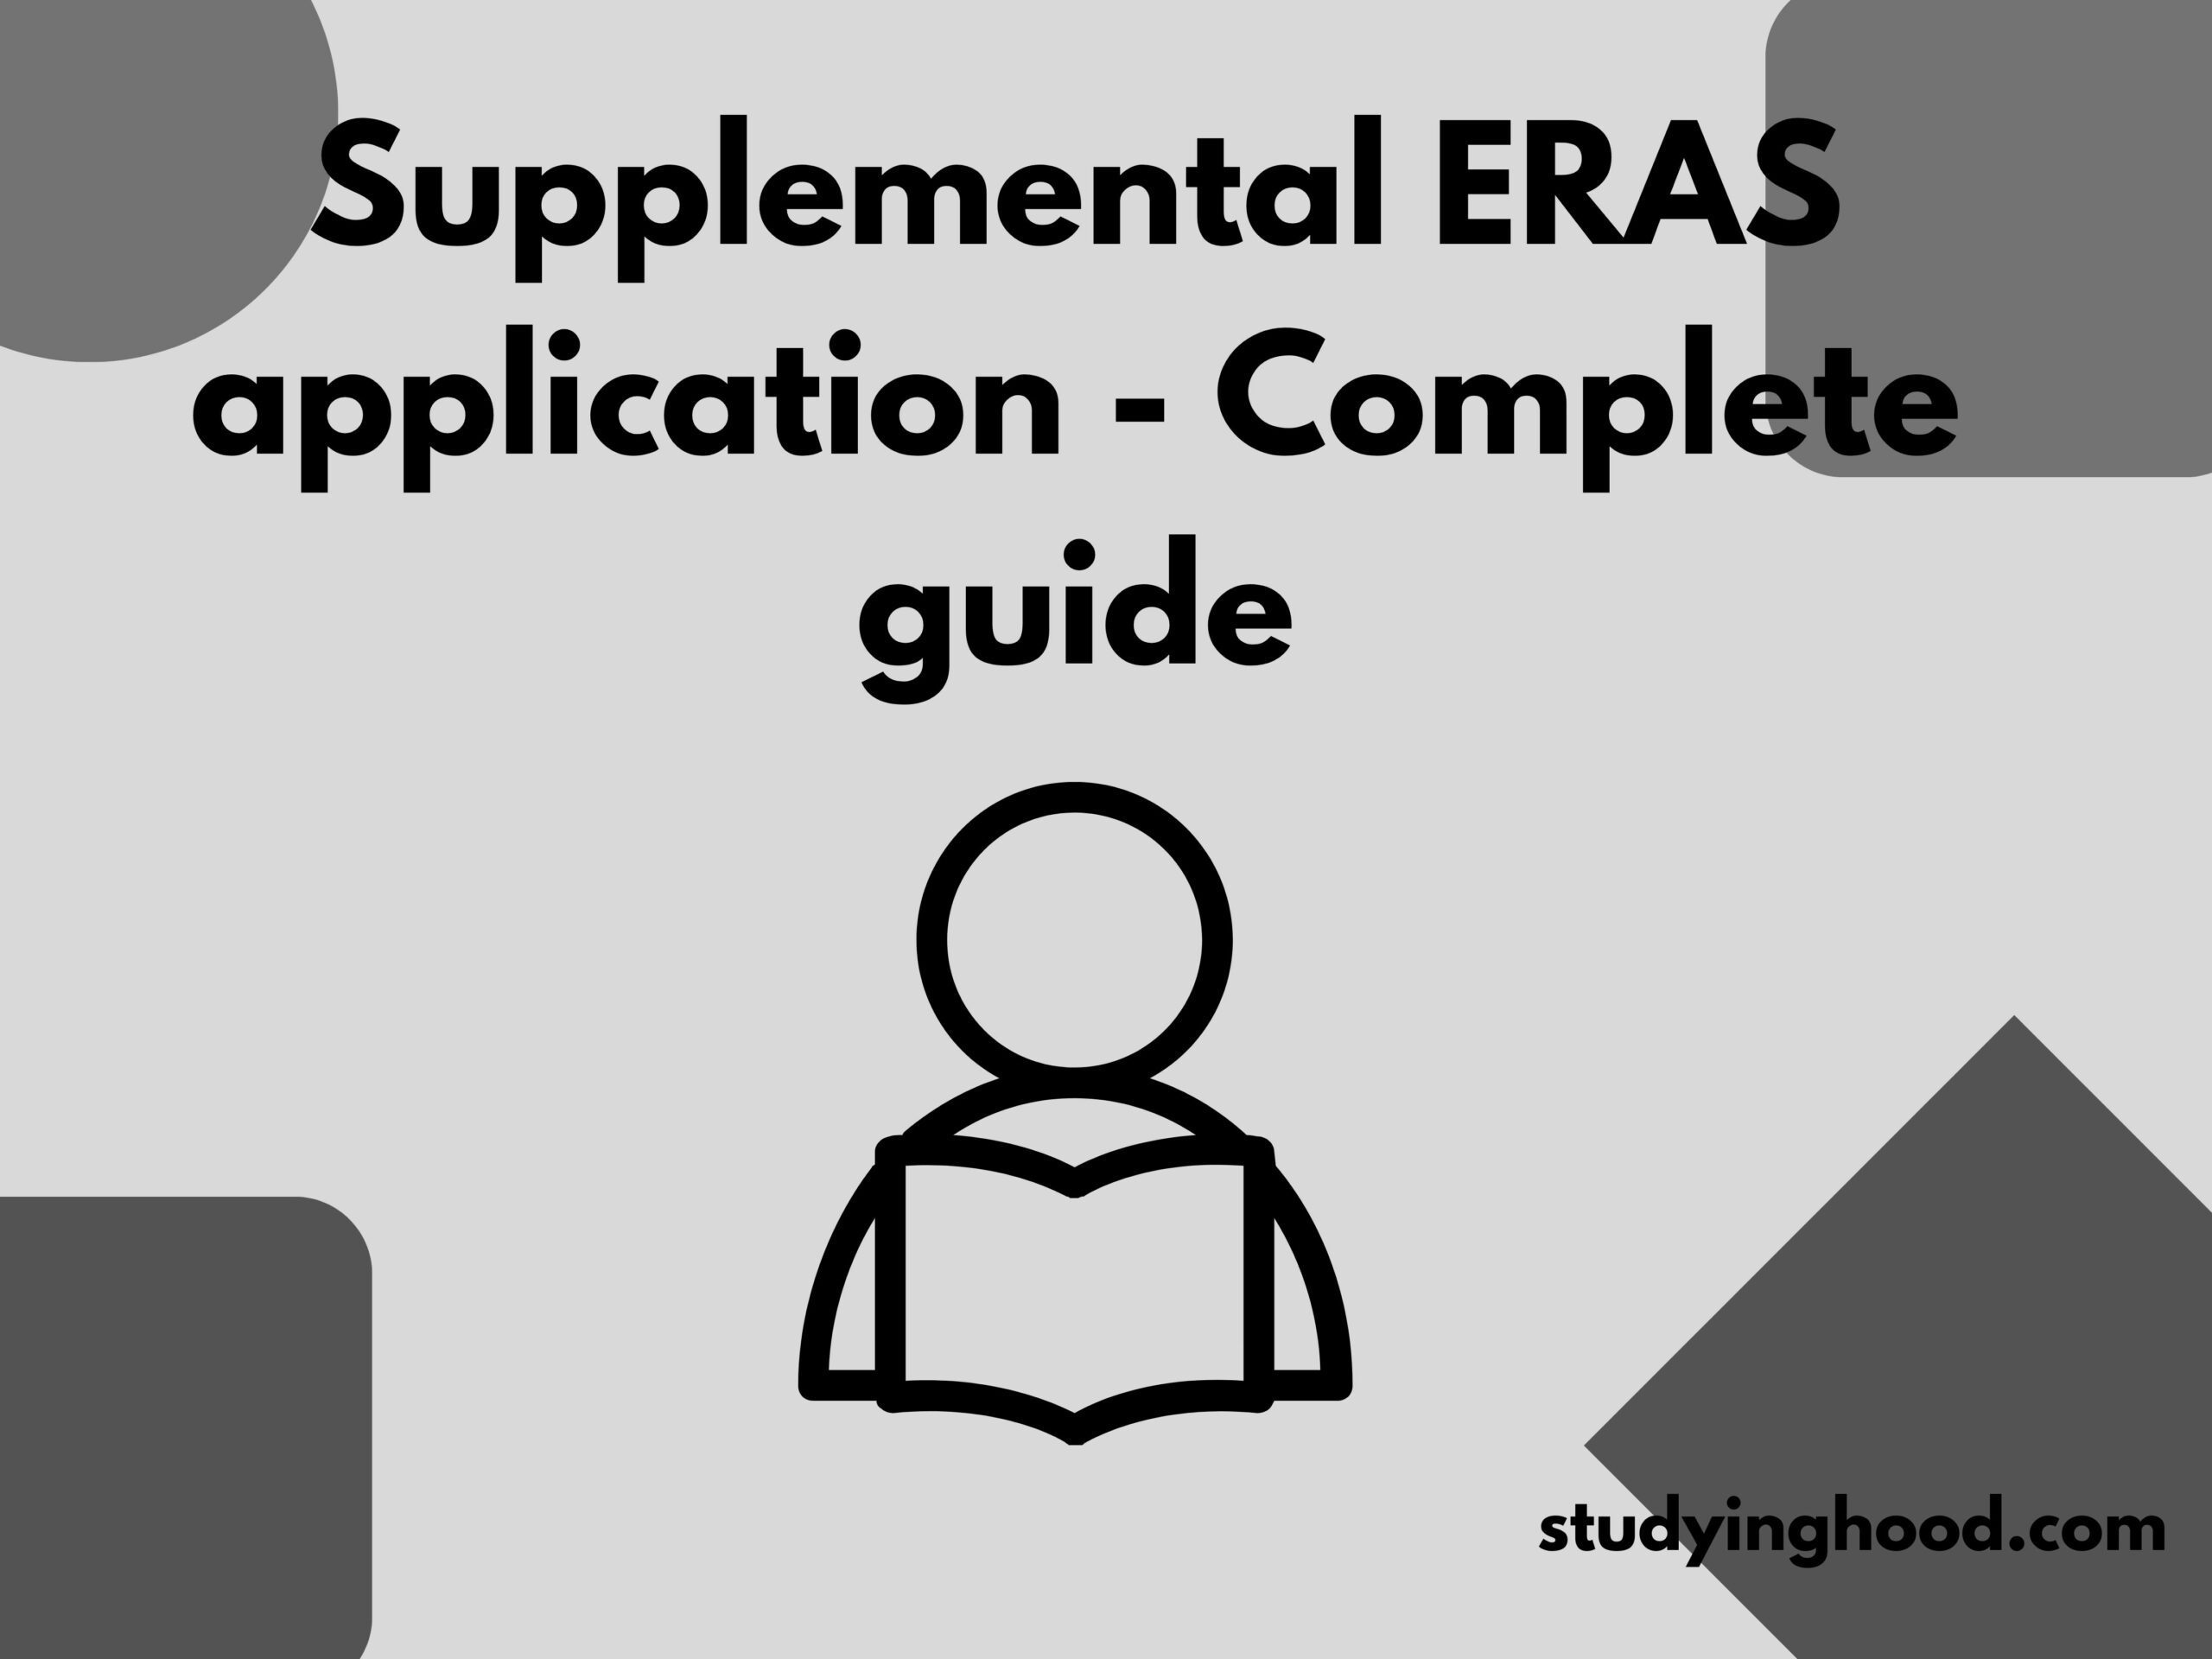 supplemental application guide eras